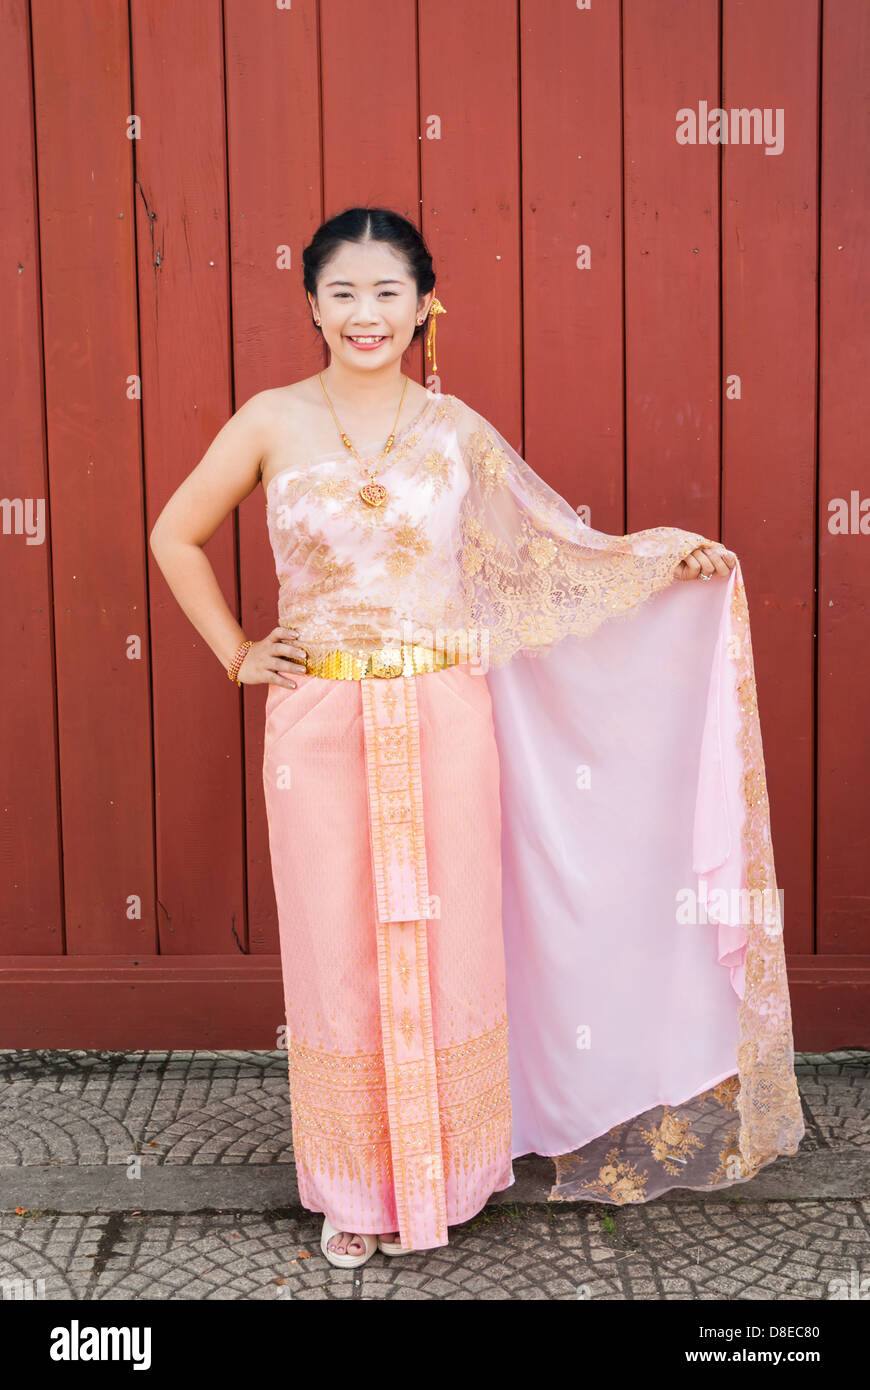 Asian Thai Woman/Bride in Thai Wedding Suit Stock Photo - Alamy